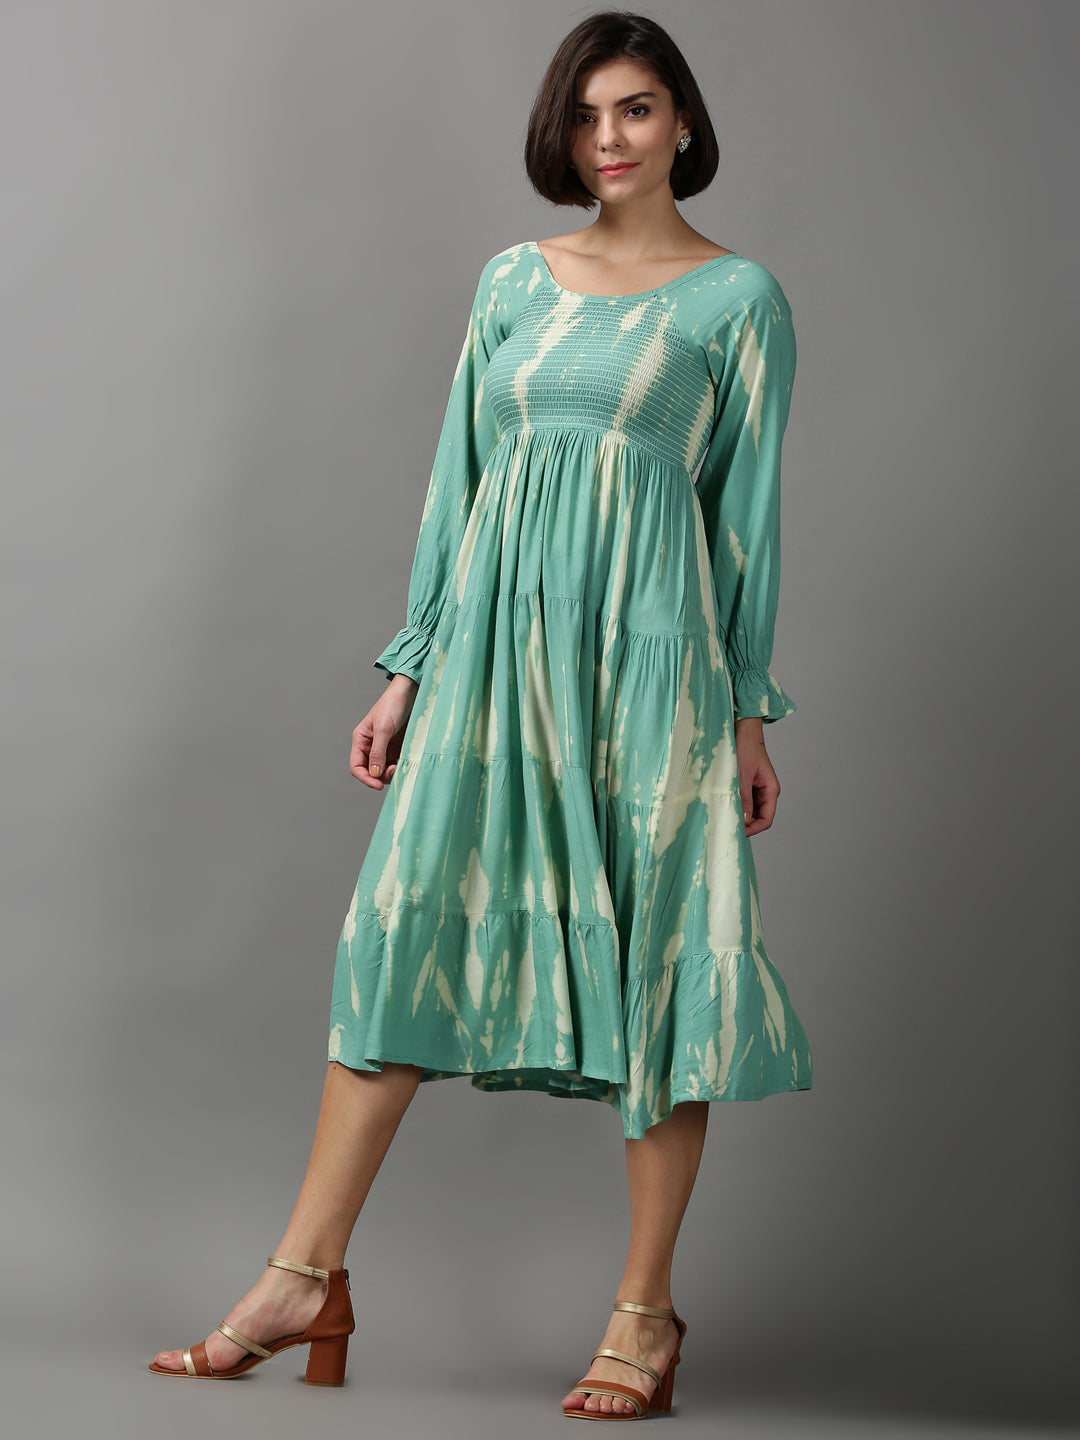 Women's Sea Green Tie Dye Fit and Flare Dress